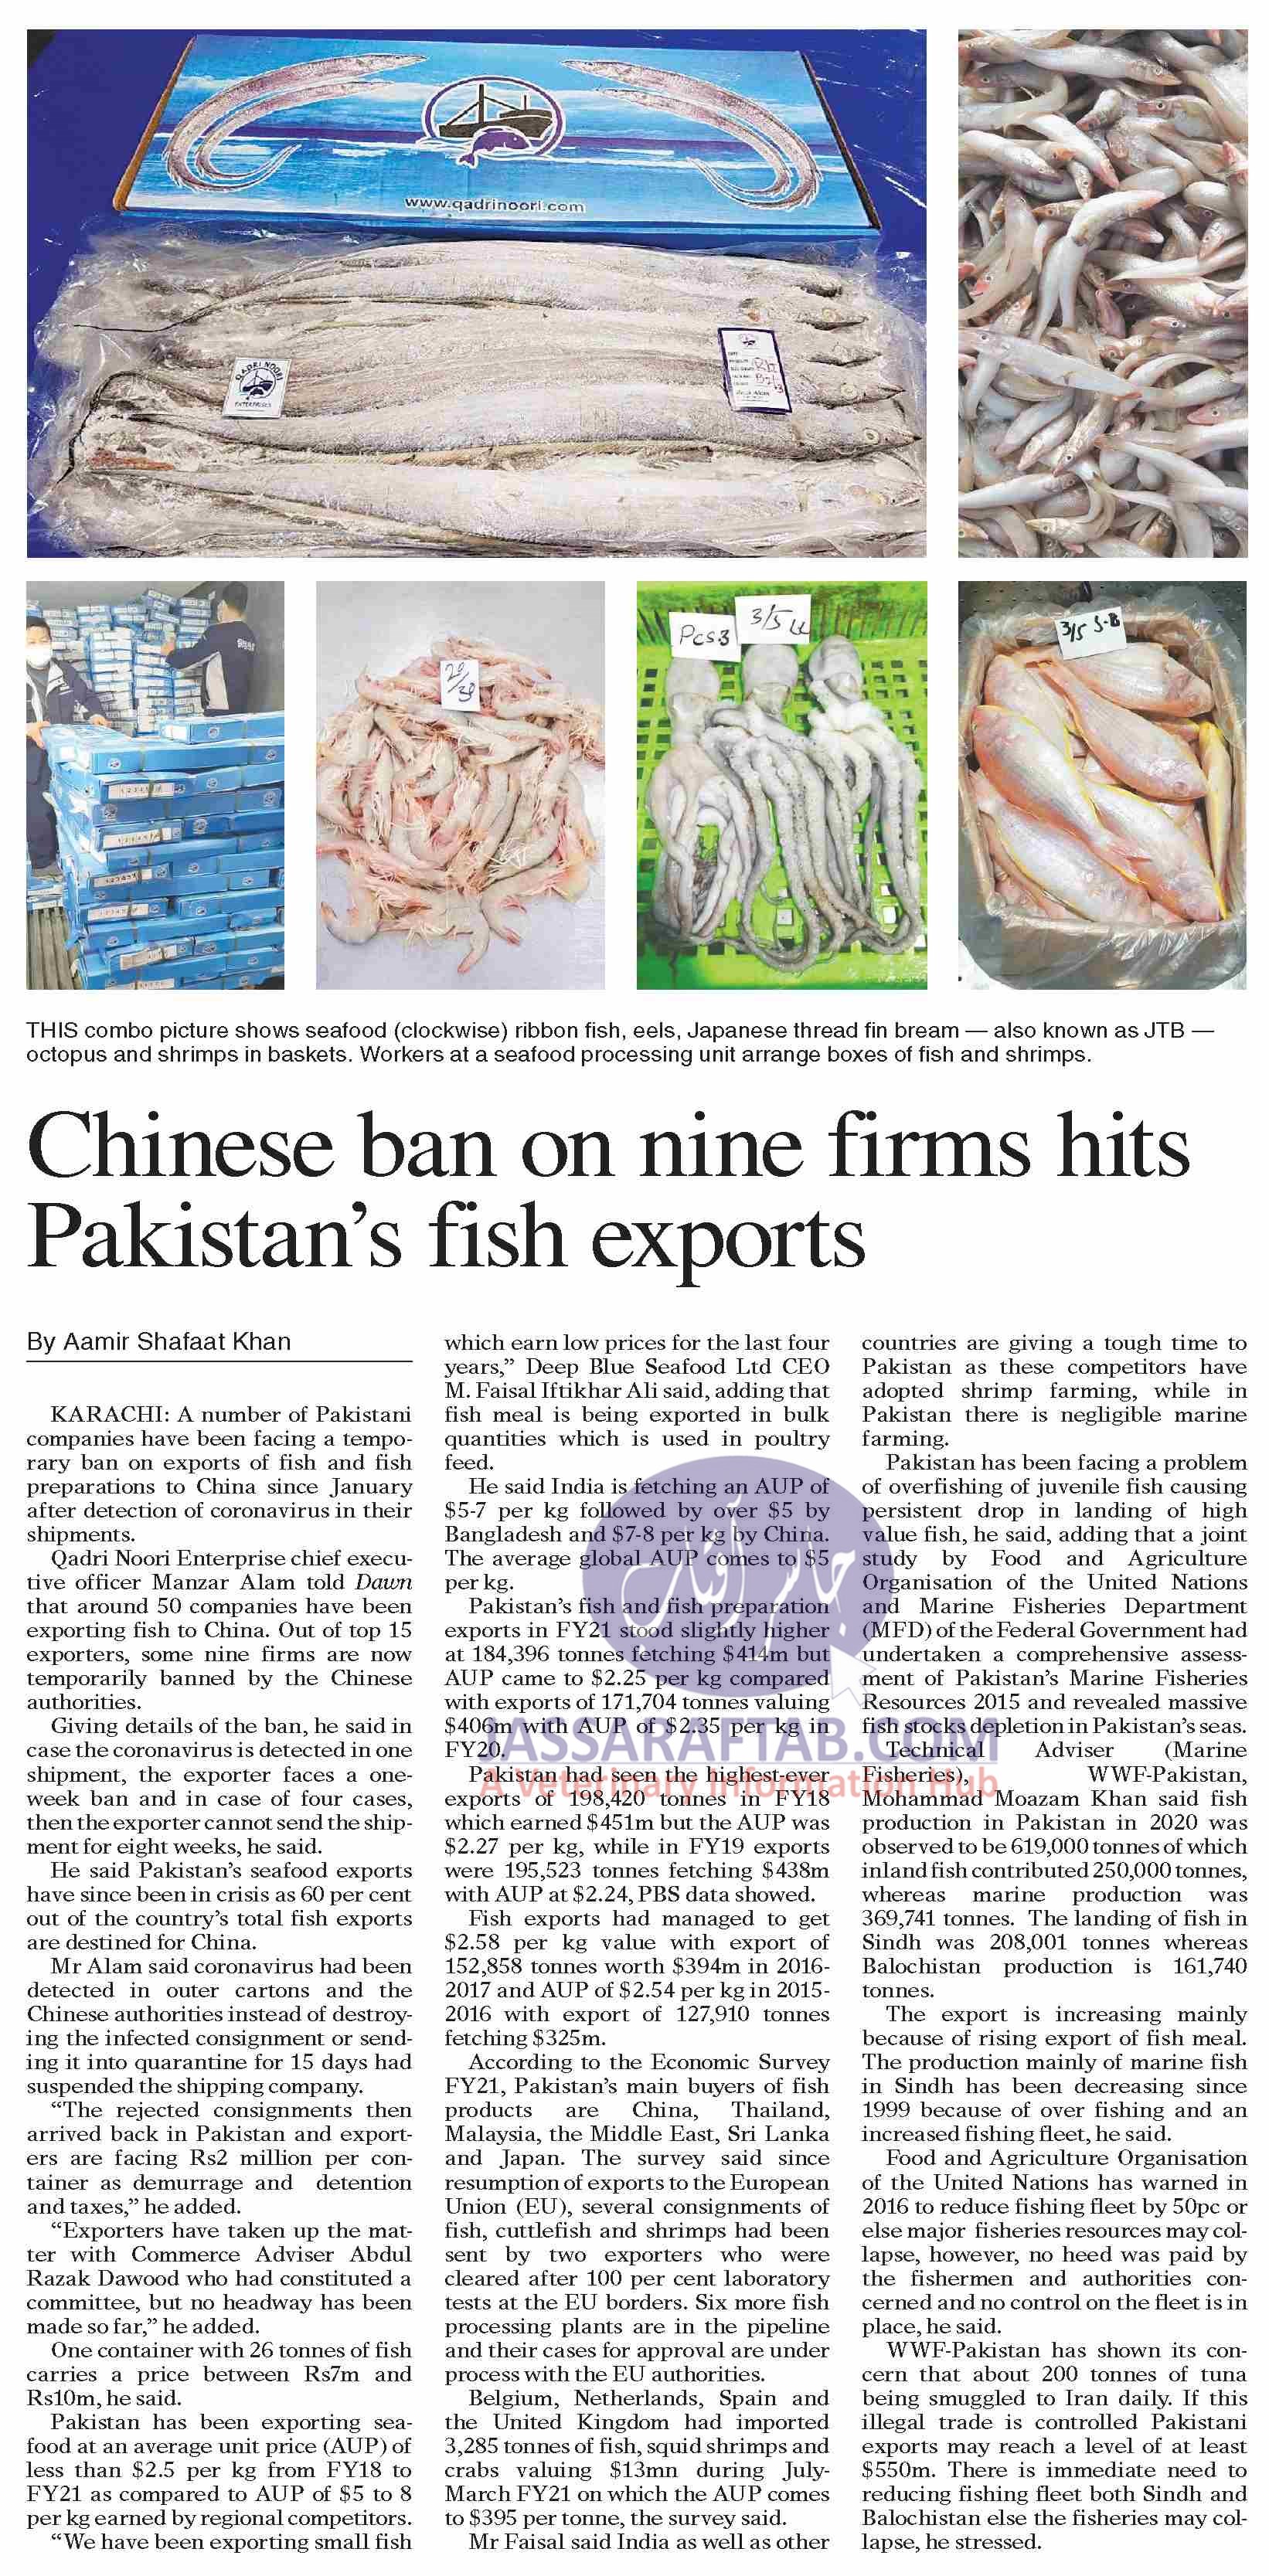 ban on exports of fish to China 